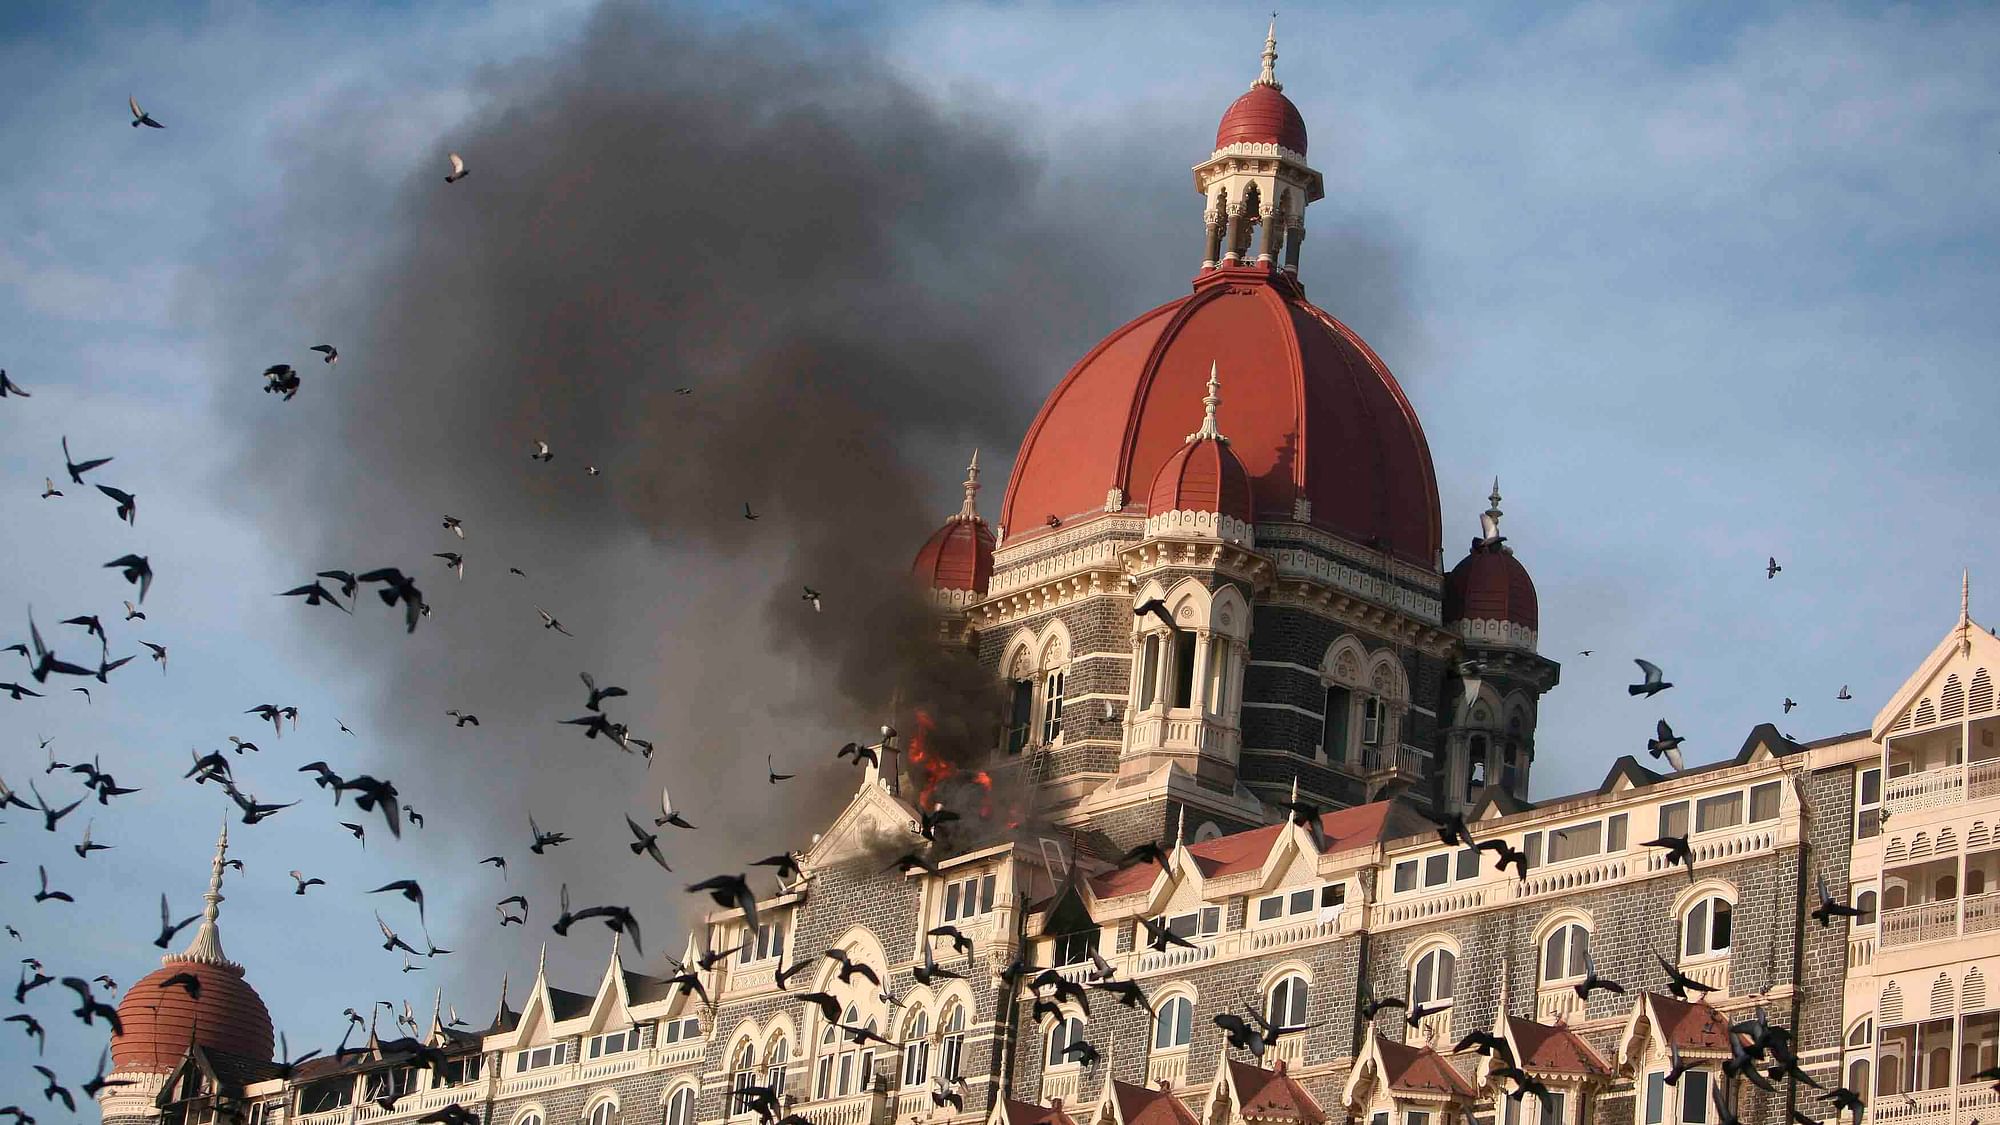 Taj Hotel on fire during Mumbai terror attacks (Photo: Reuters) 